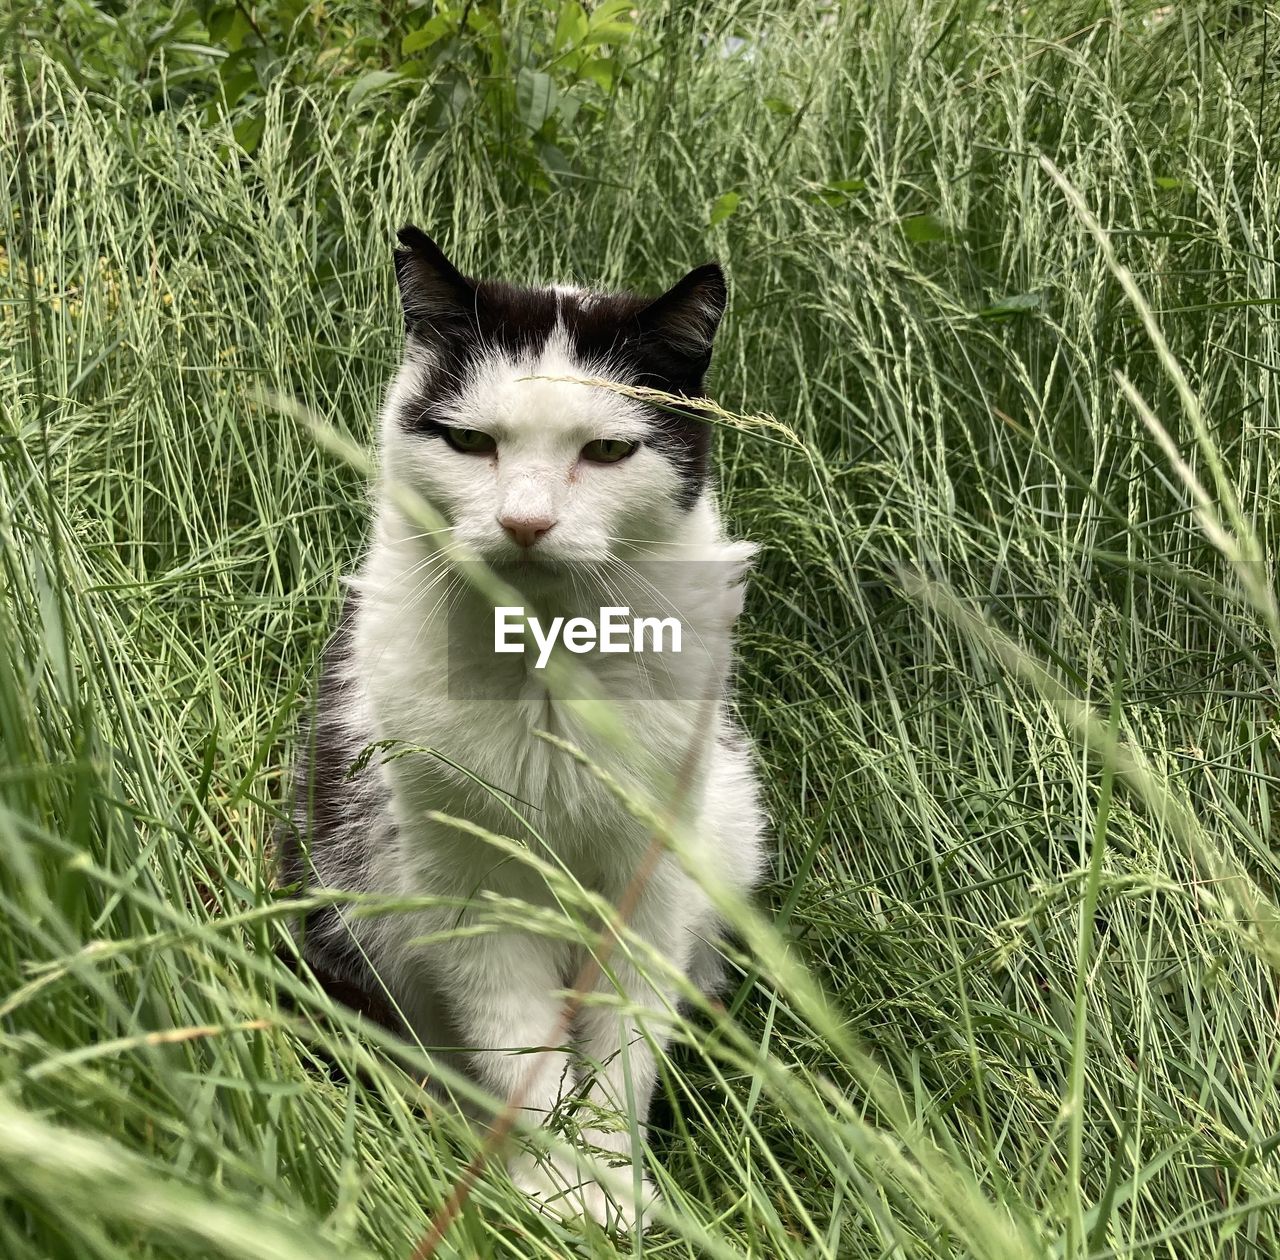 CAT ON GRASS FIELD